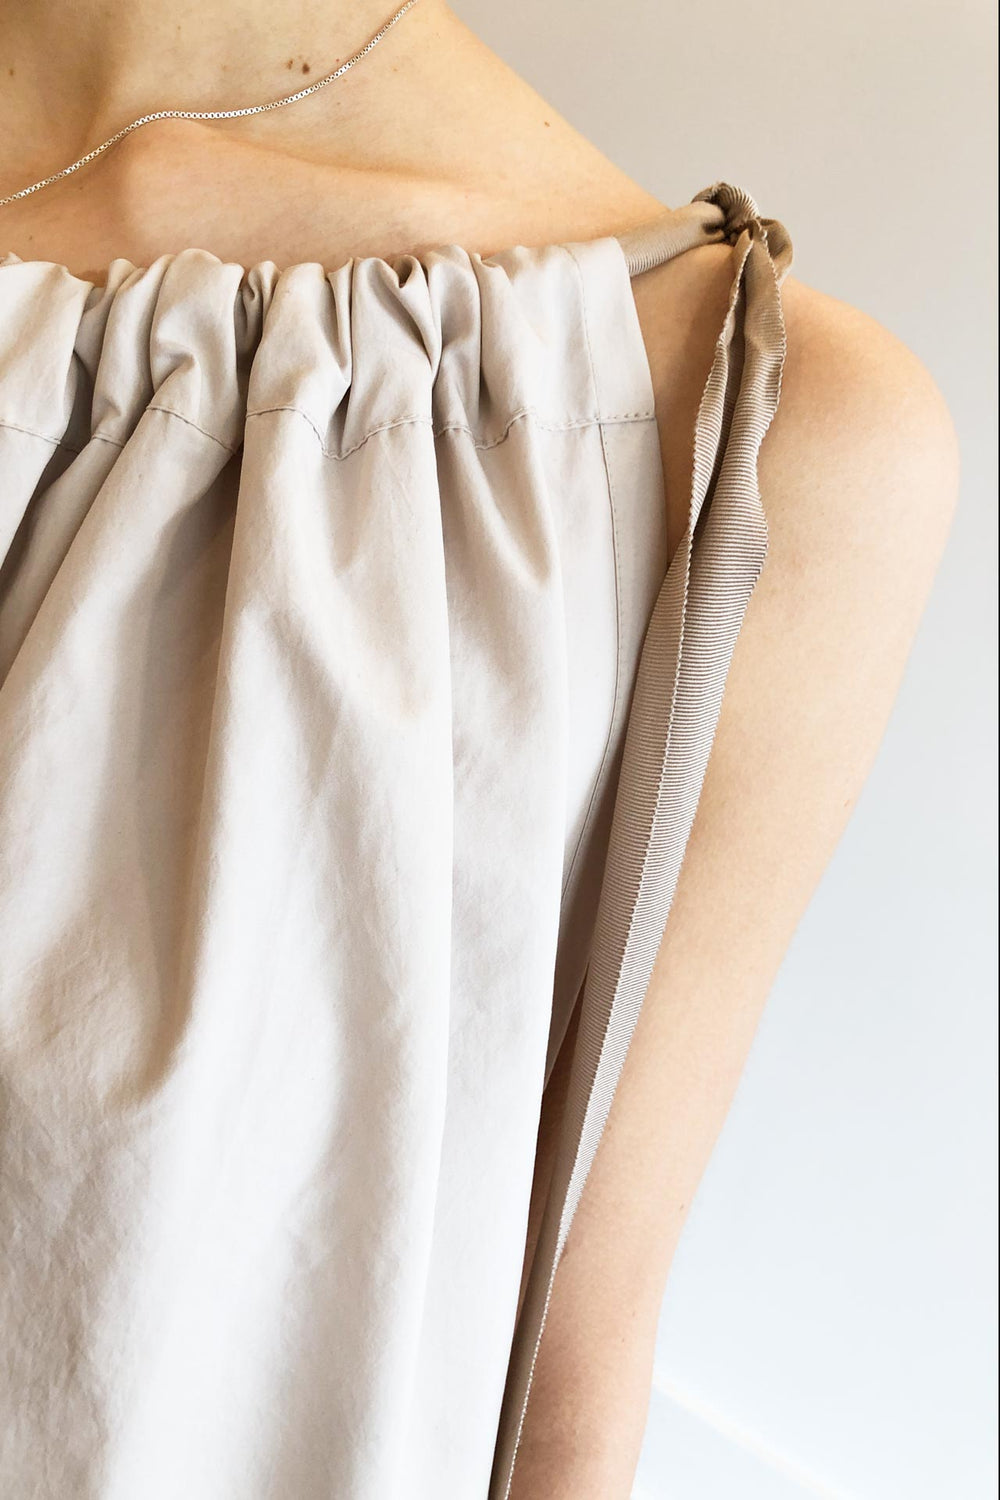 Fashion Designer CARL KAPP collection | La Digue Onesize Fits All White dress | Sydney Australia